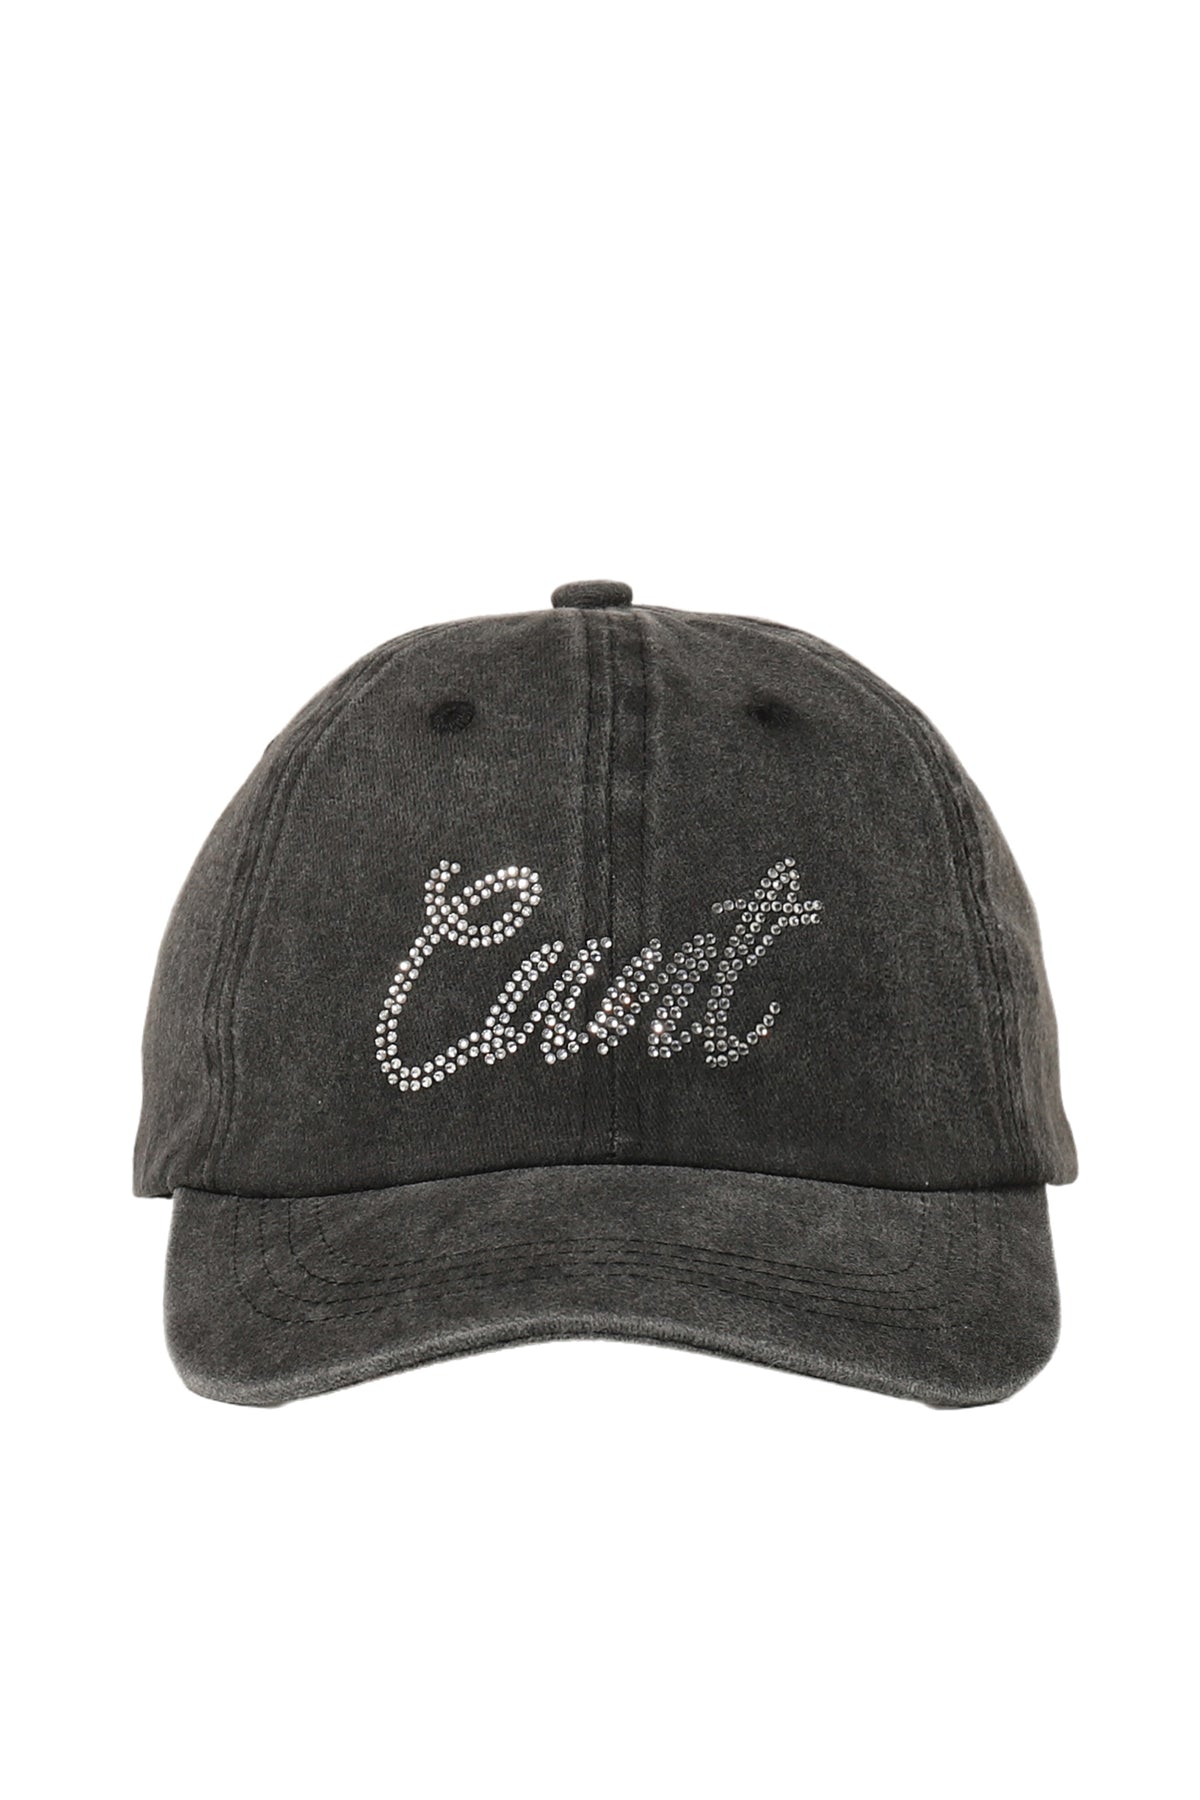 CUNT CAP BLACK / BLK